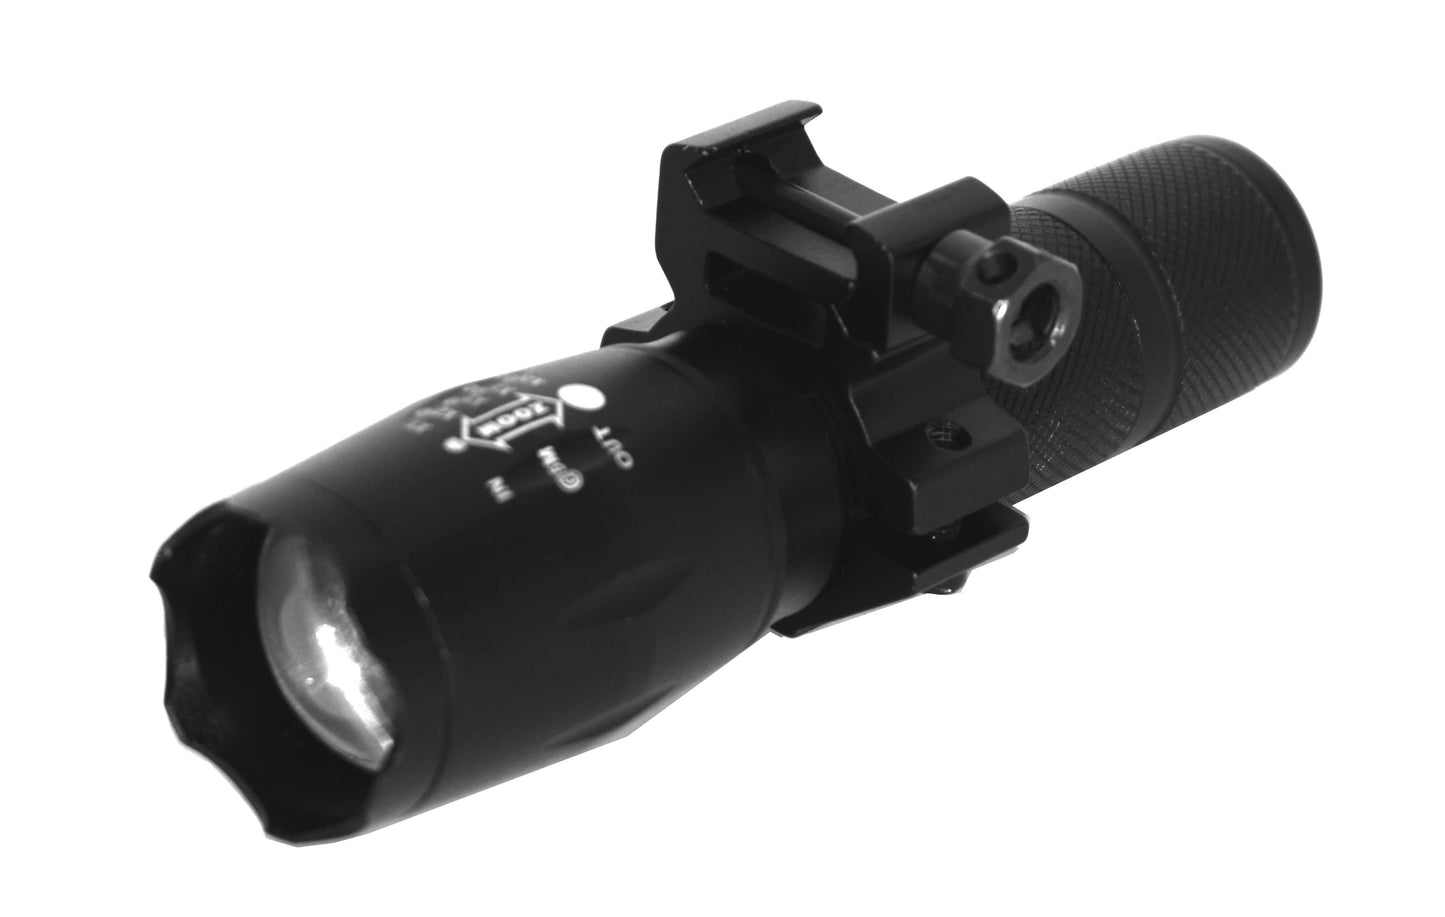 Benelli M4 Shotgun 12 Gauge Pump tactical flashlight Home Defense.